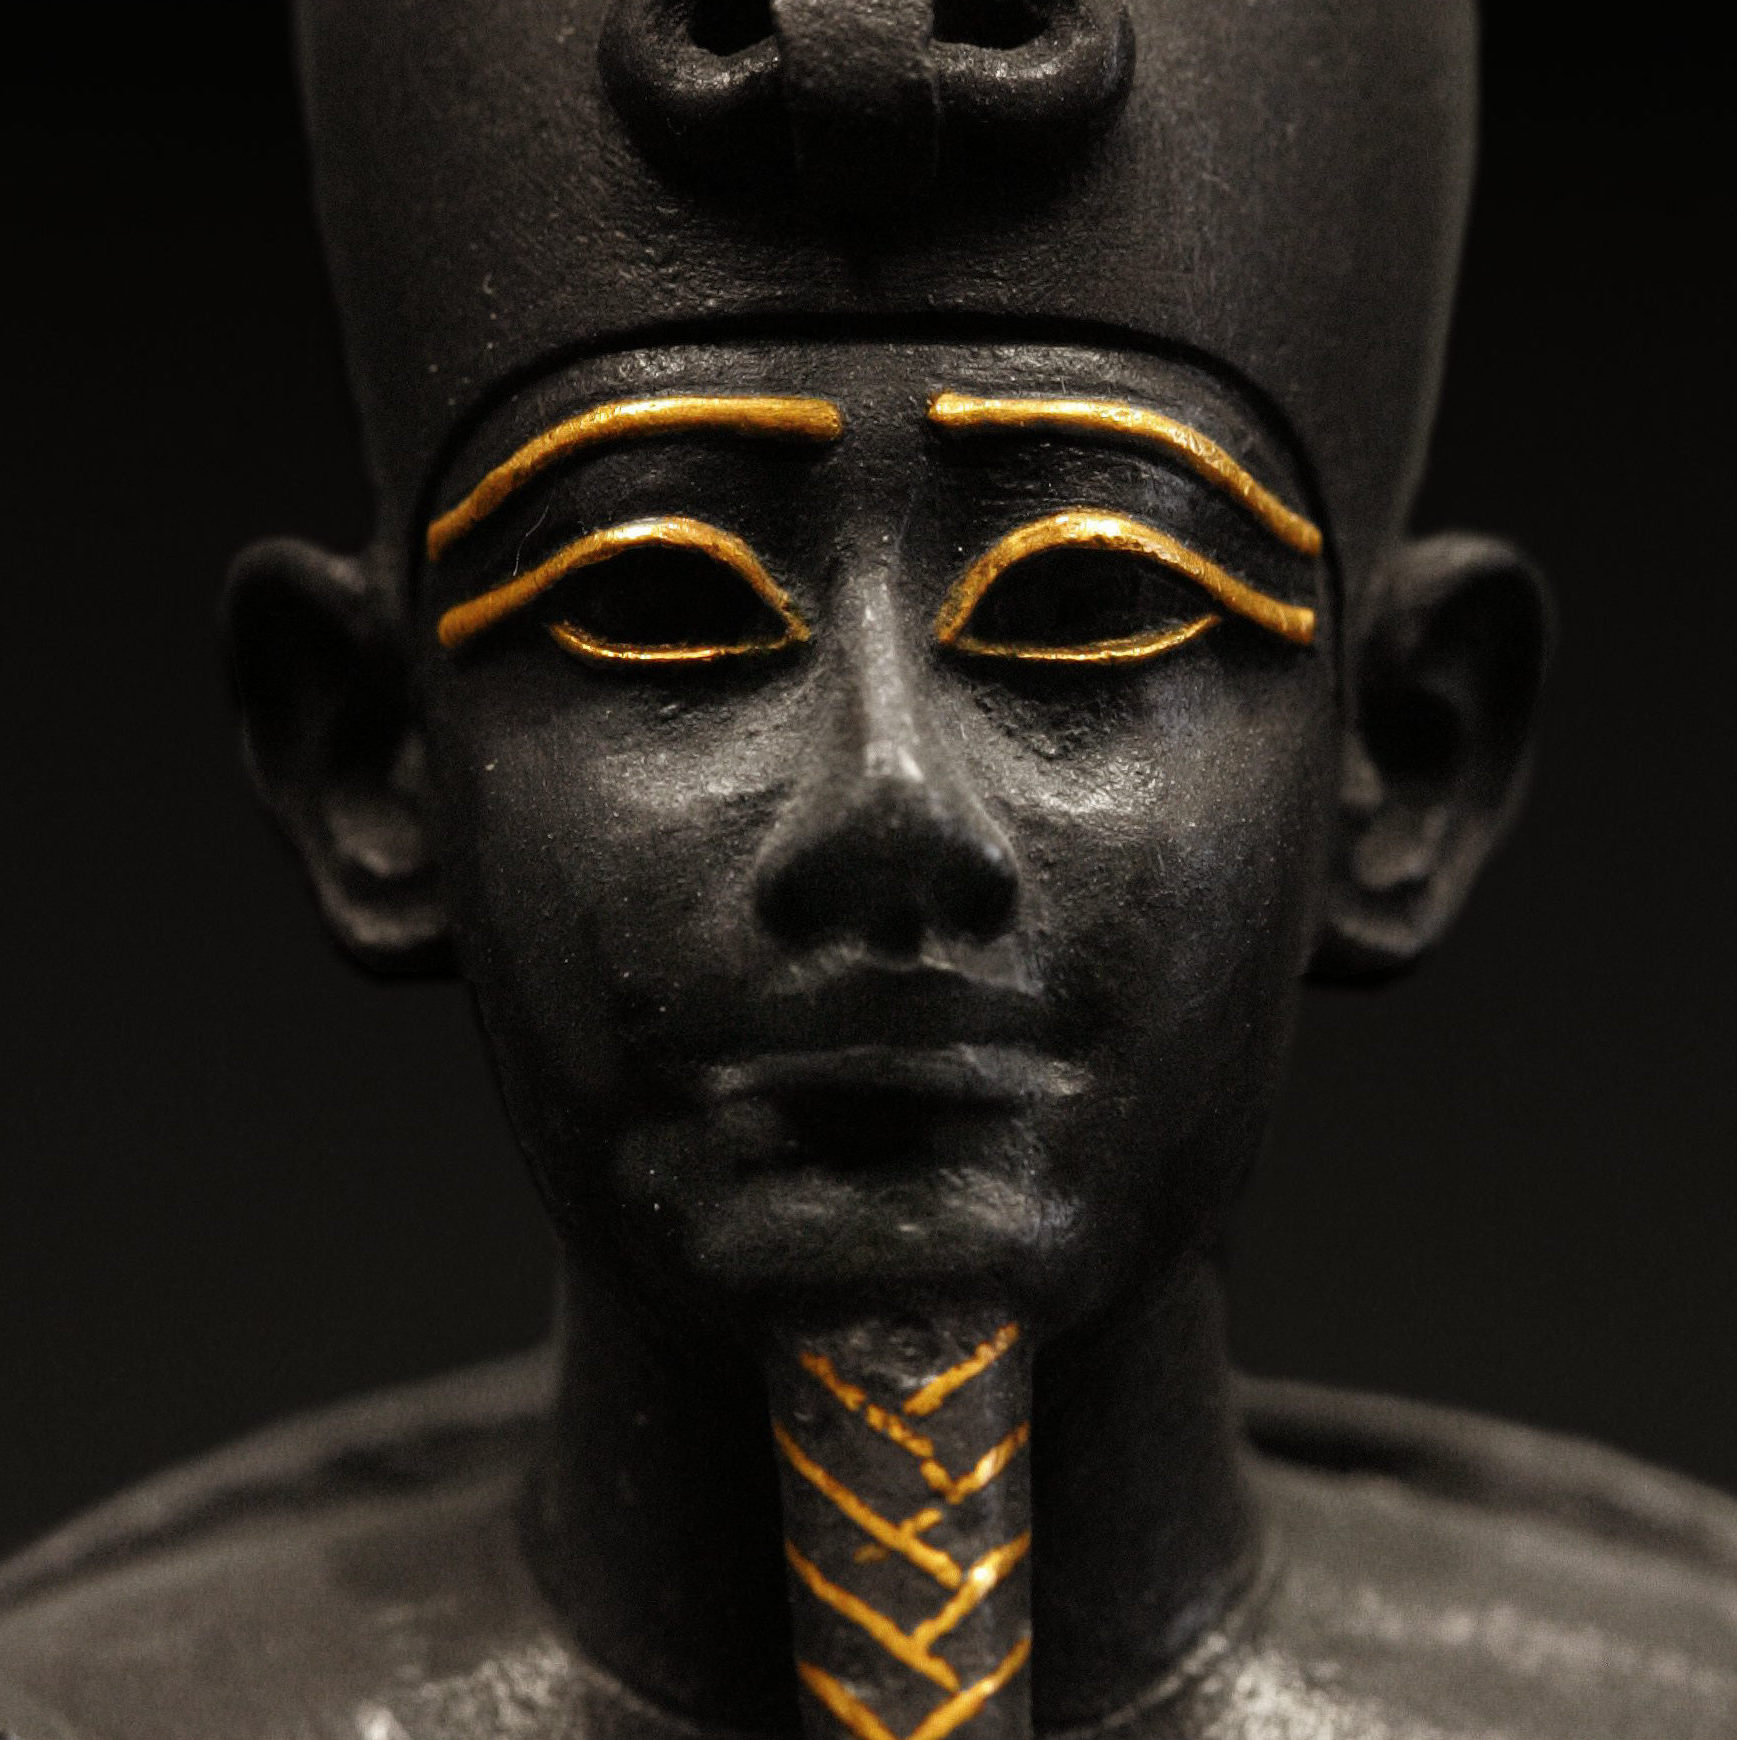 Osiris uk